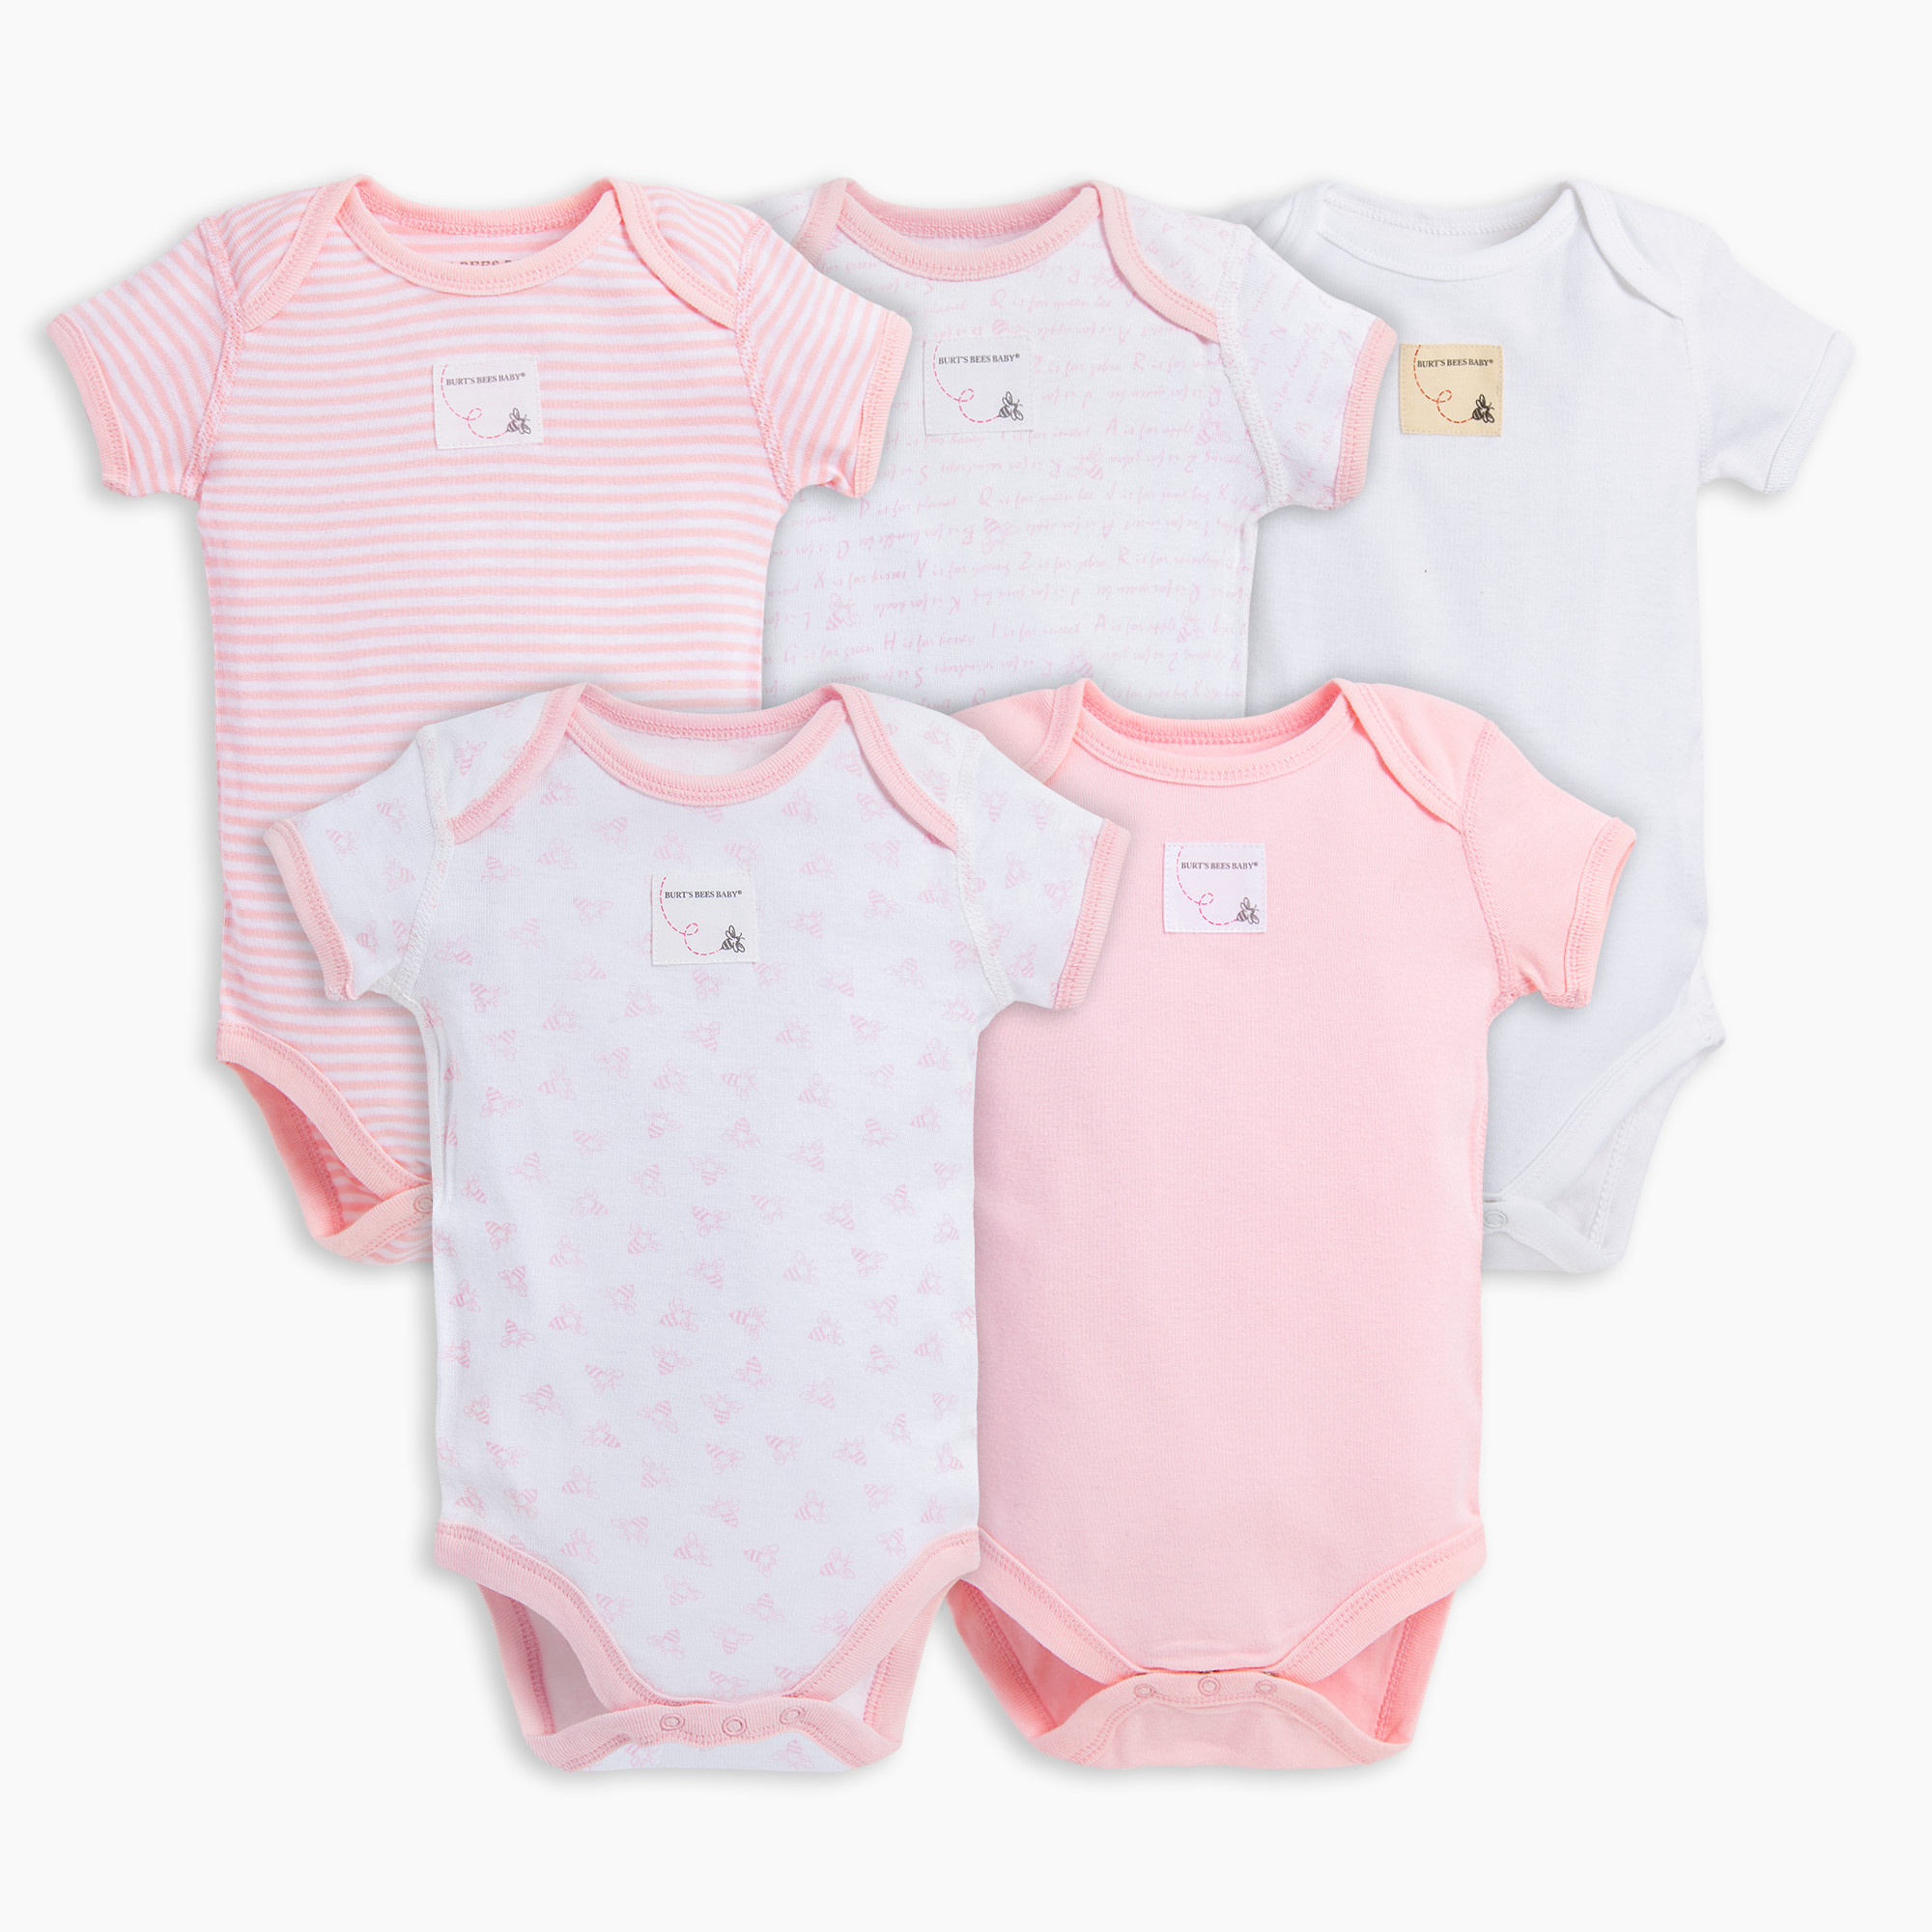 BURTS BEES KIDS UNDERBEES 3 Cami Bodysuits. Pink, Grey, White. 24 Months.  NEW.